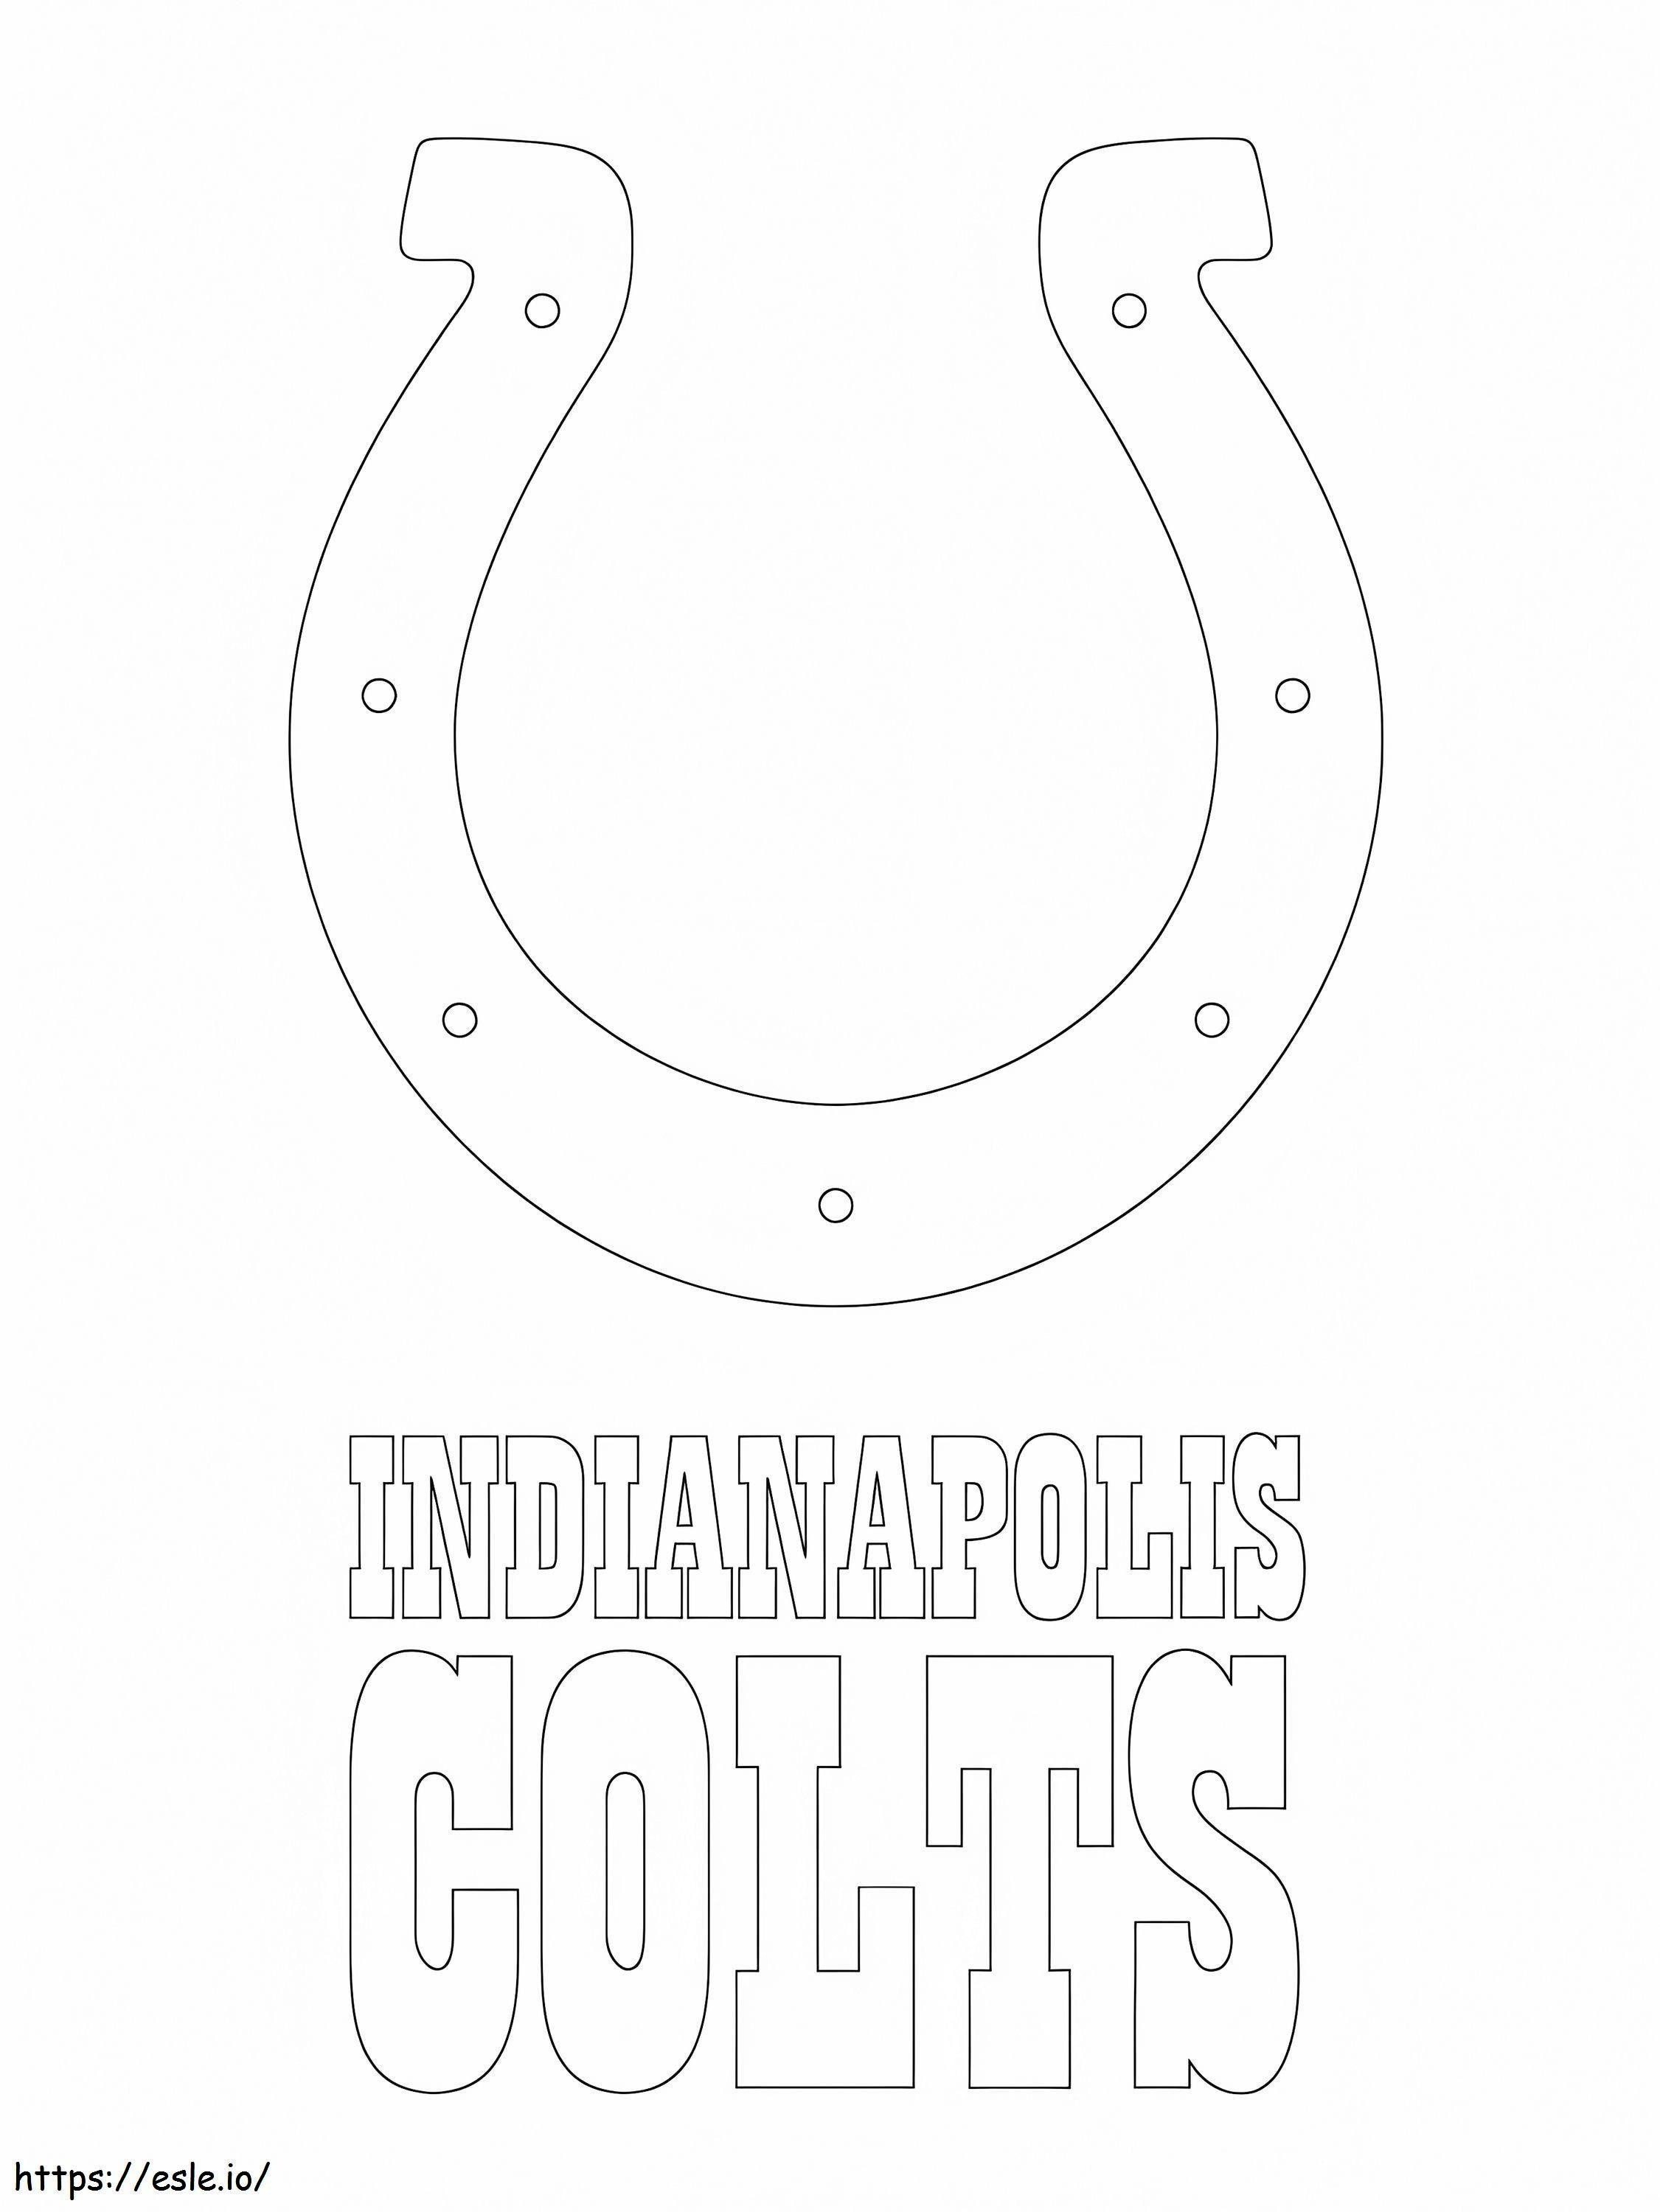 Indianapolis Colts-logo kleurplaat kleurplaat